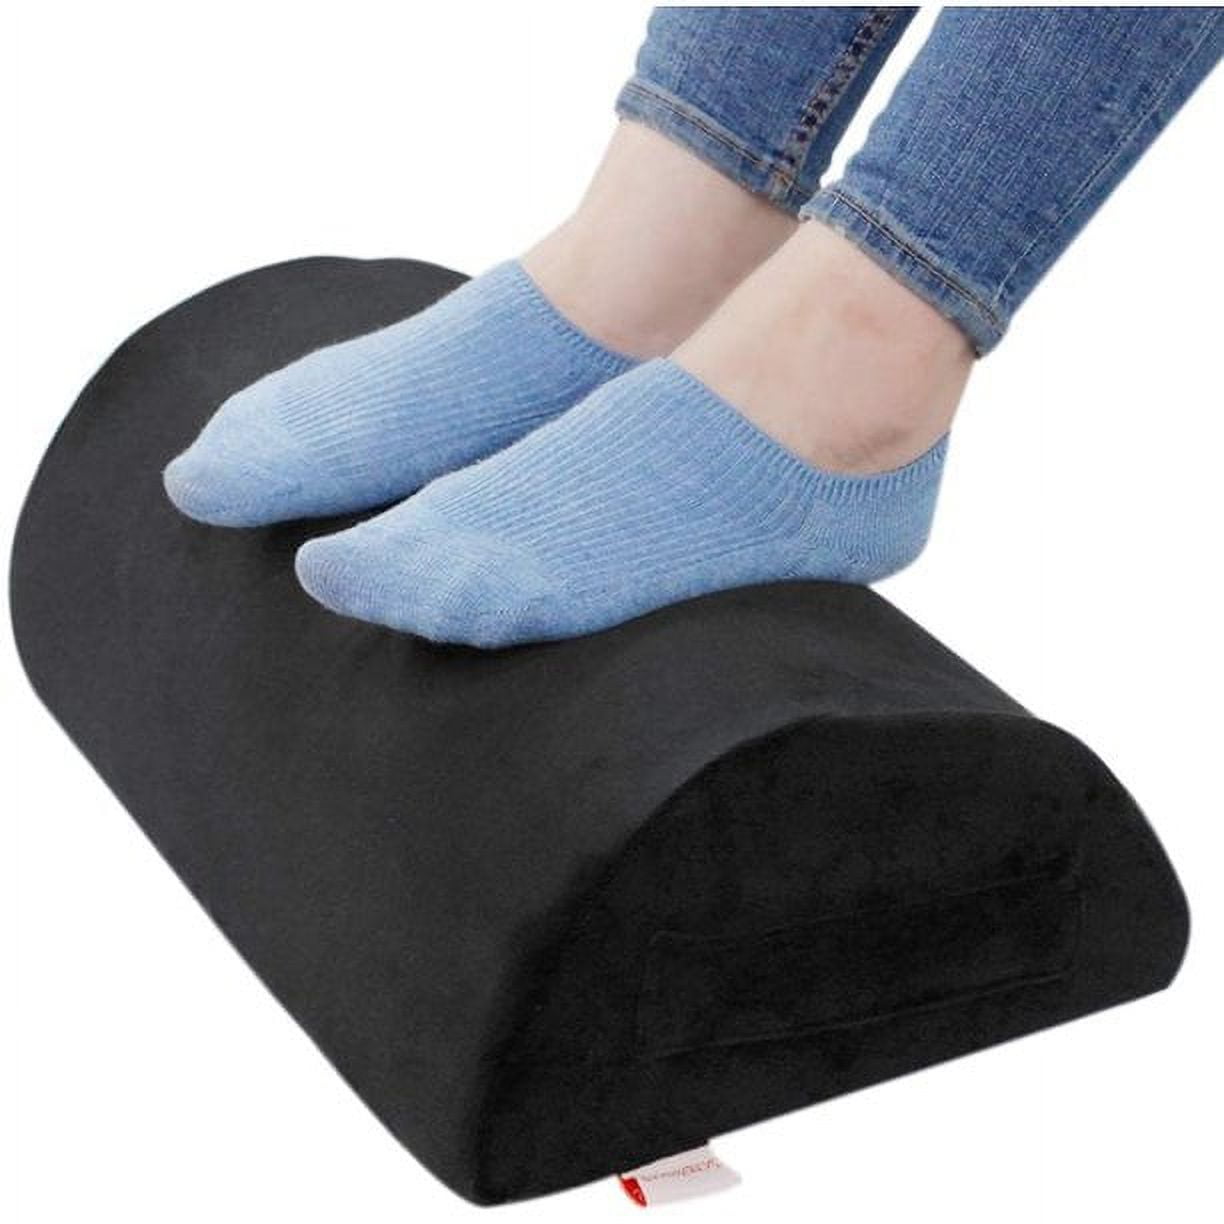 Dropship Foot Rest Under Desk Ergonomic Footrest Cushion ,office